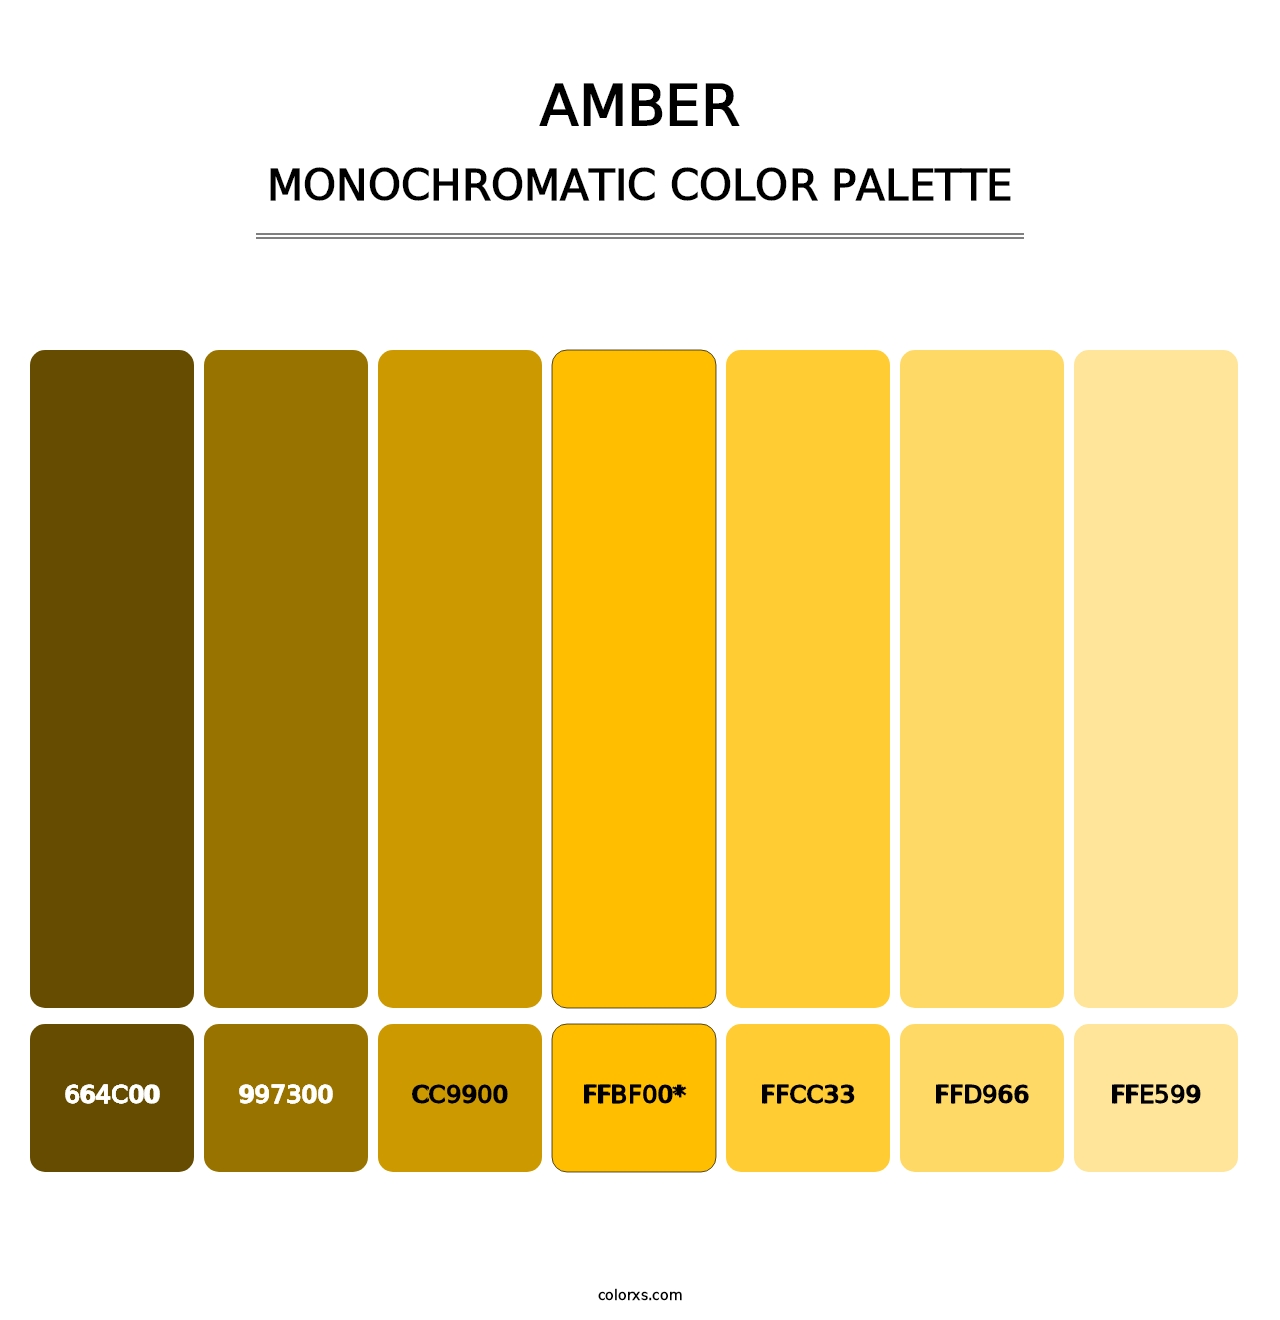 Amber - Monochromatic Color Palette